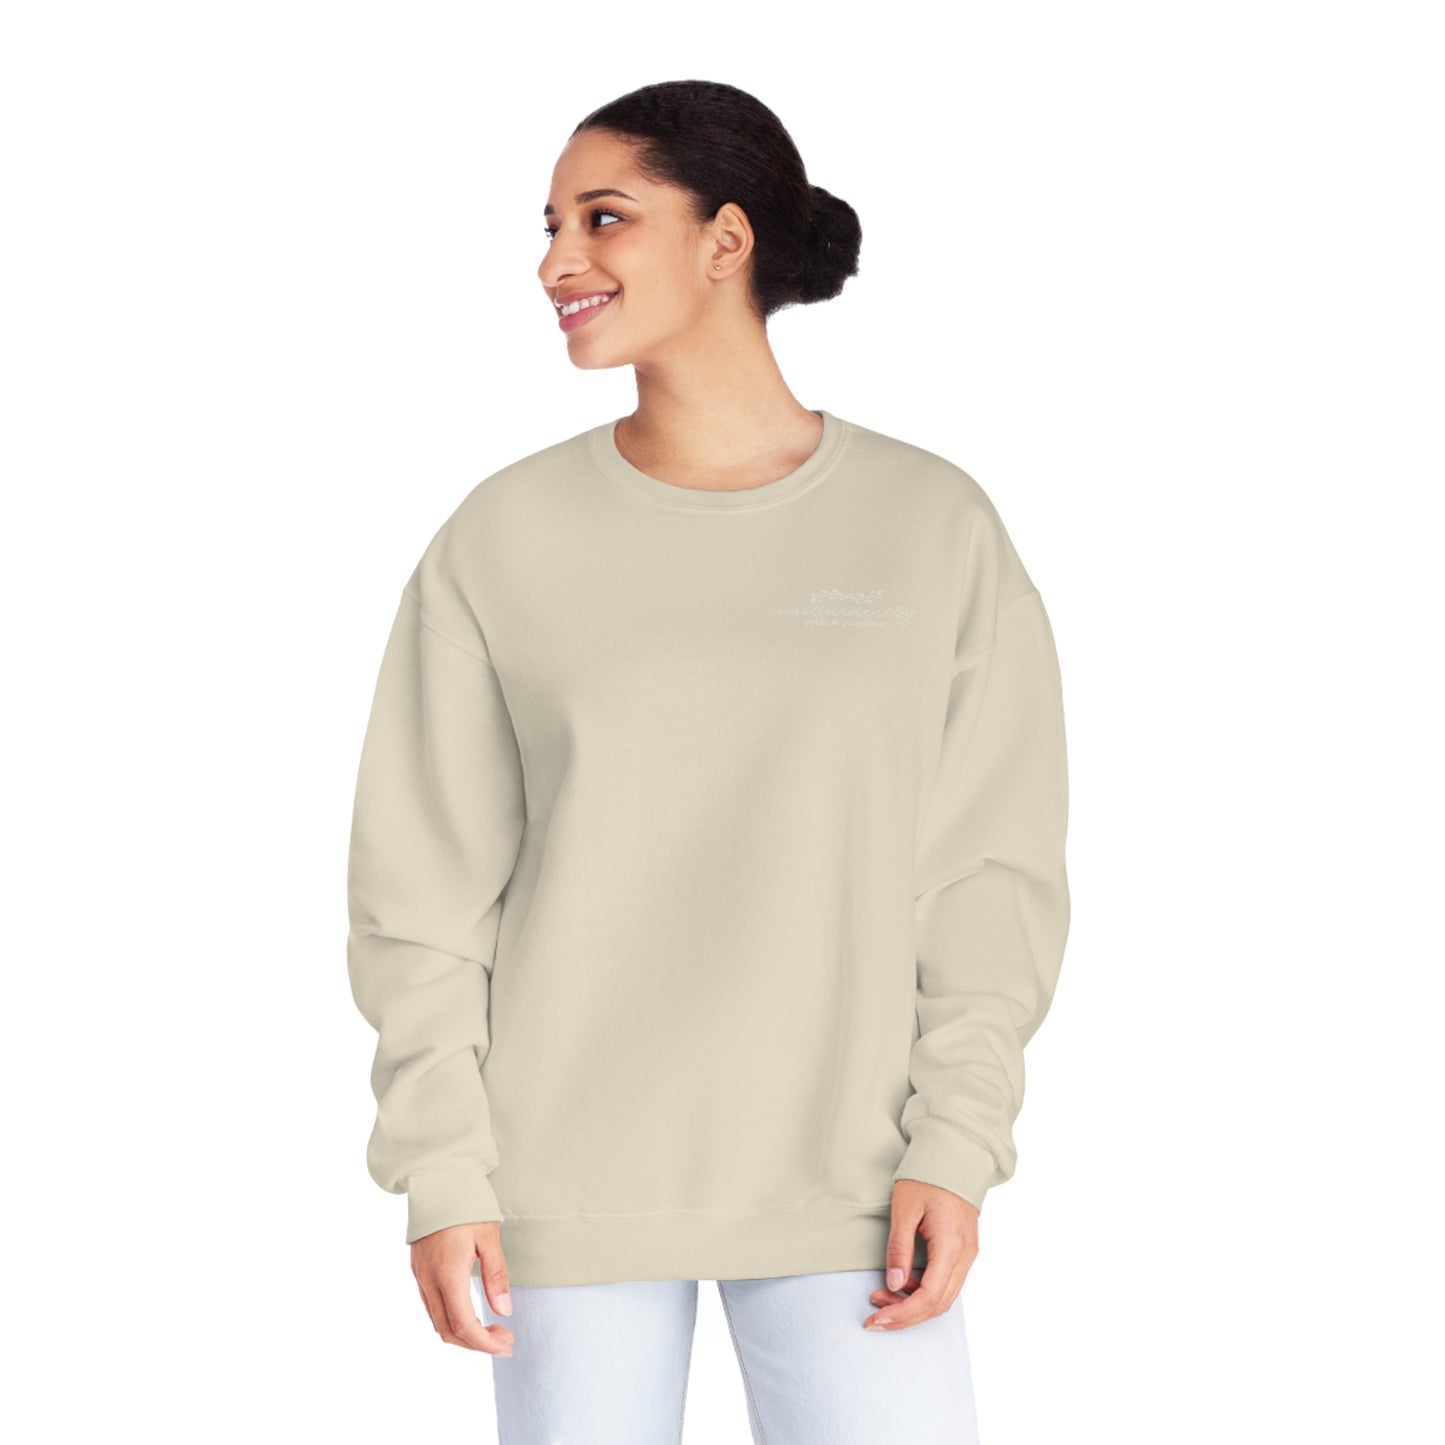 Sweatshirt:  Jane Austen "most ardently" Crewneck Sweatshirt